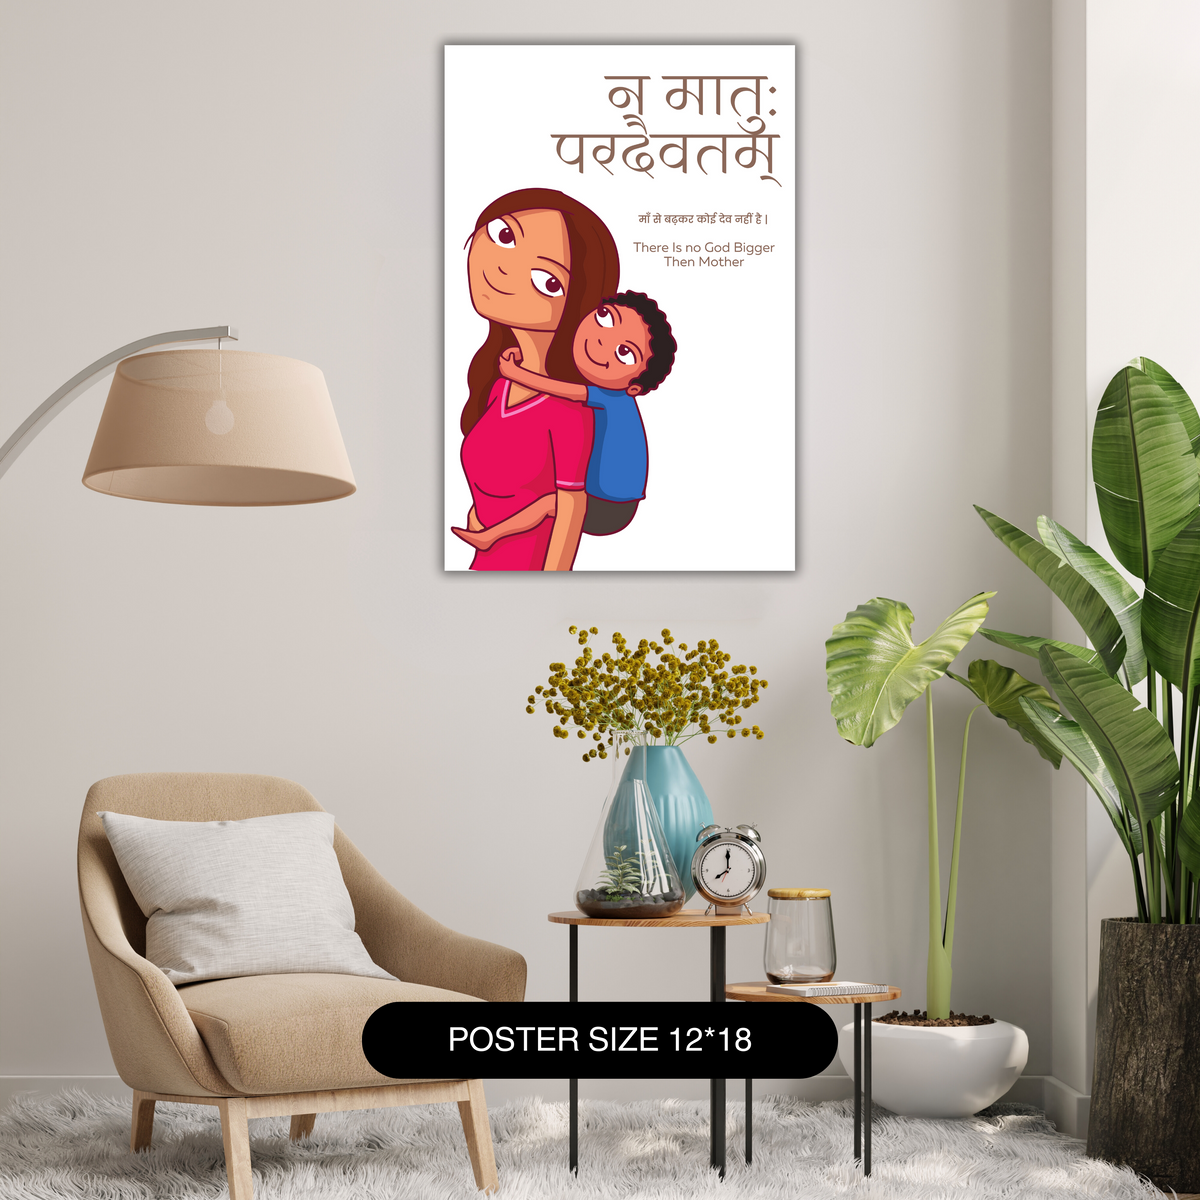 न मातु: परदैवतम् : Mother Is Superior - Sanskrit Wall Poster